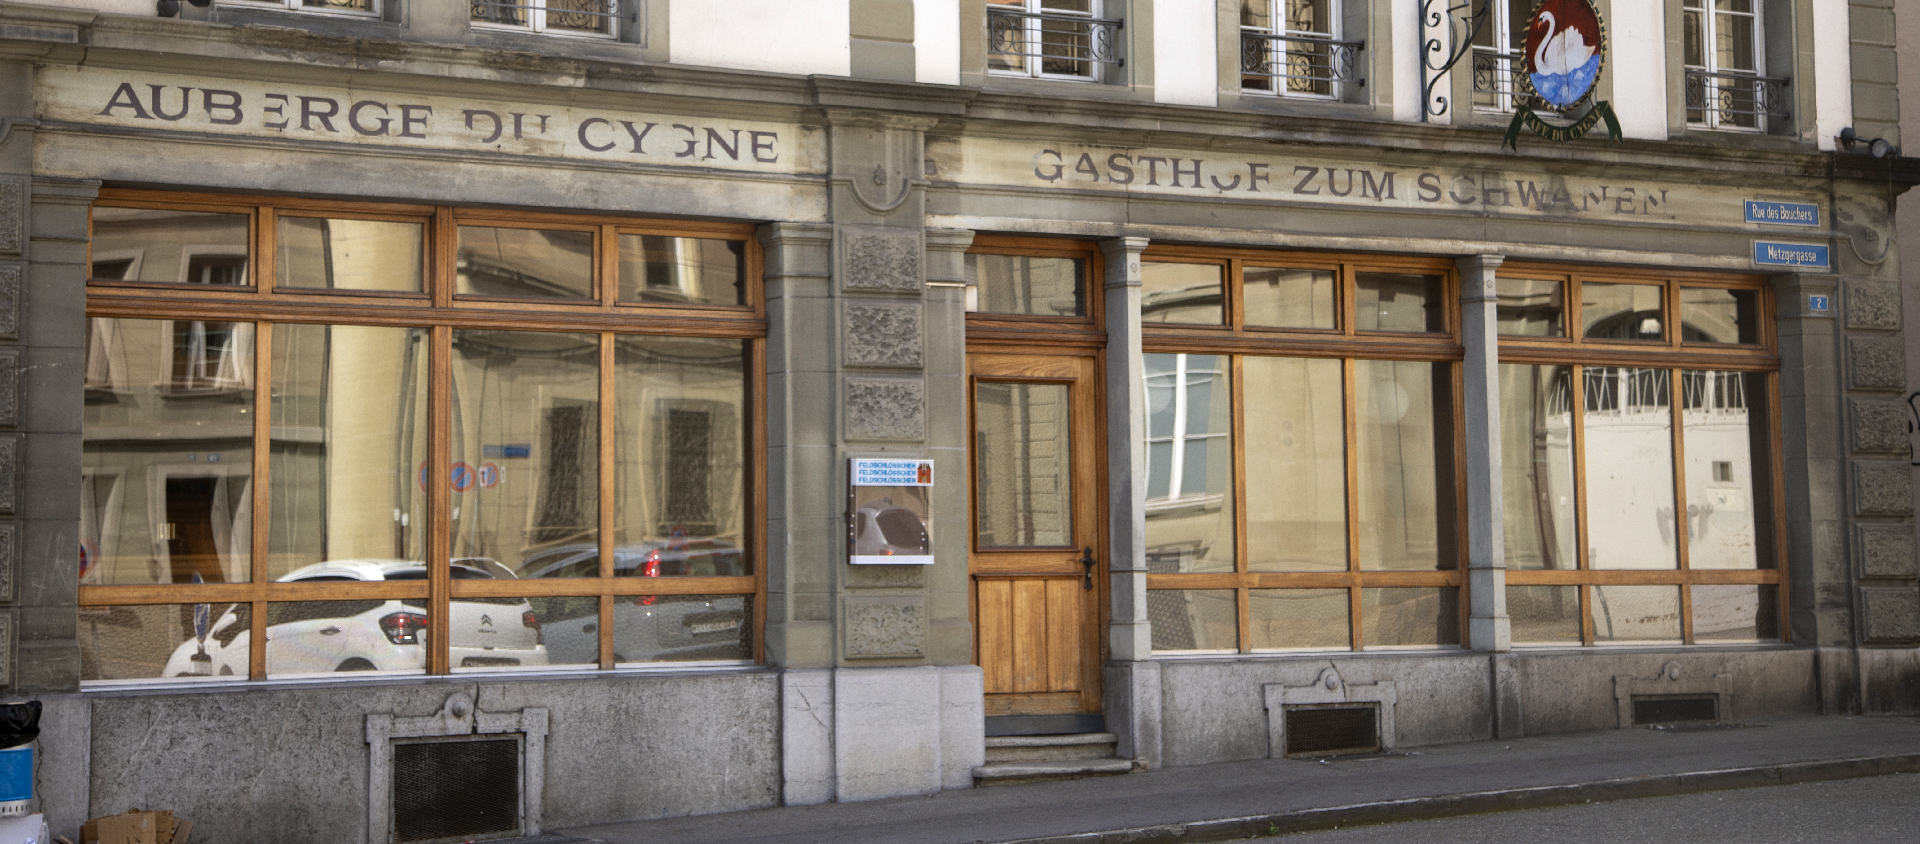 Le café-restaurant du Cygne sera rénové avant d'ouvrir en 2023 | © Joao Carita